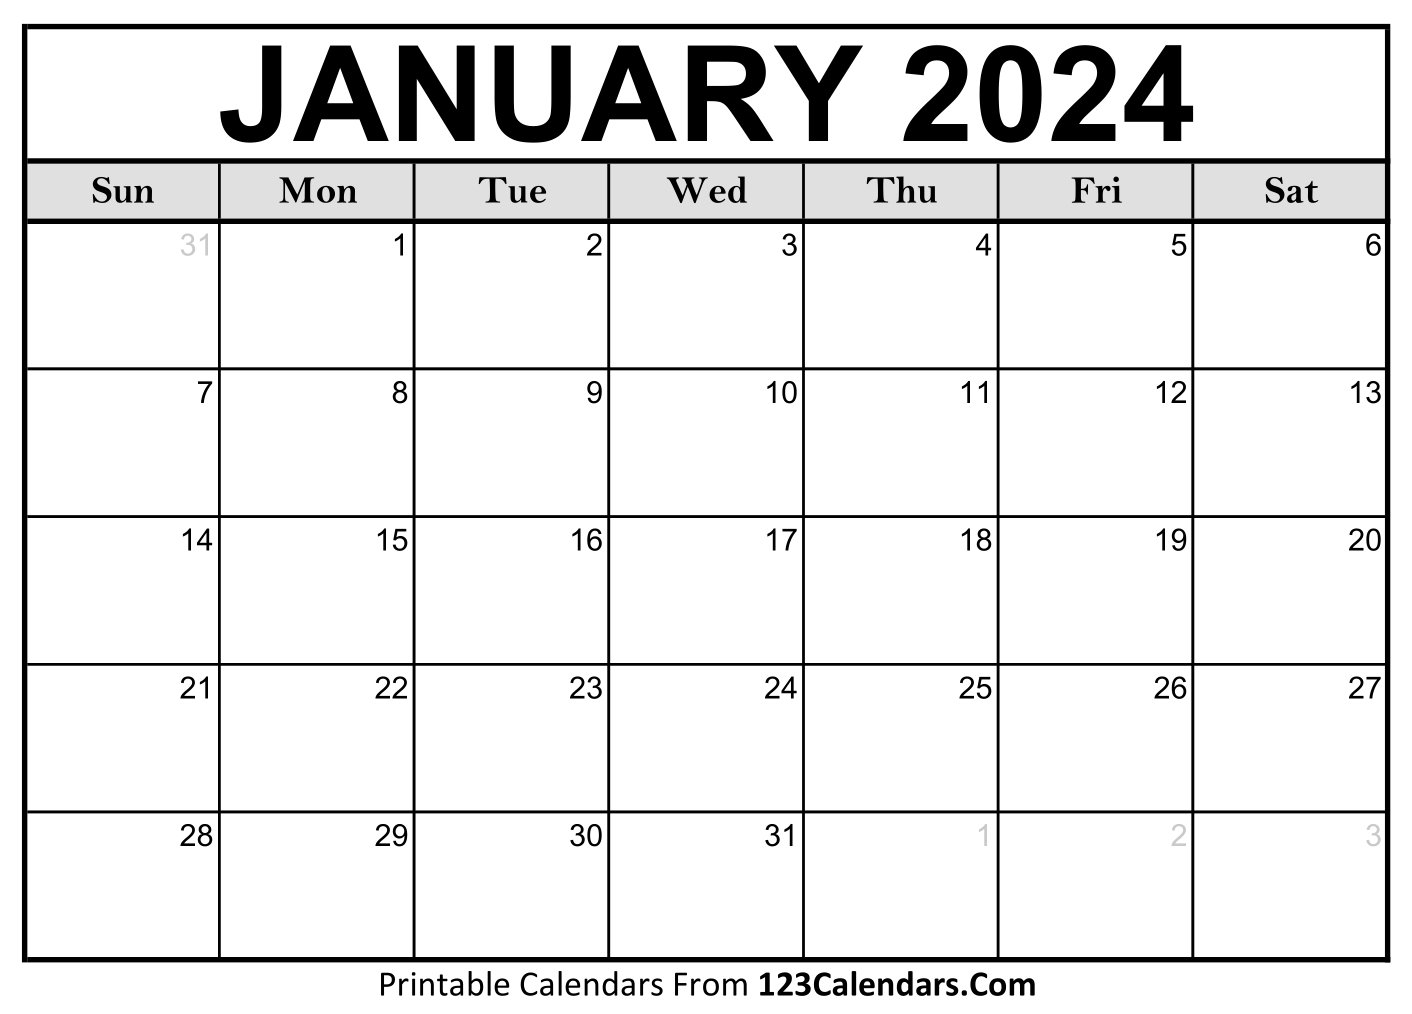 2024 January Calendar Page Free Online January 2024 Calendar